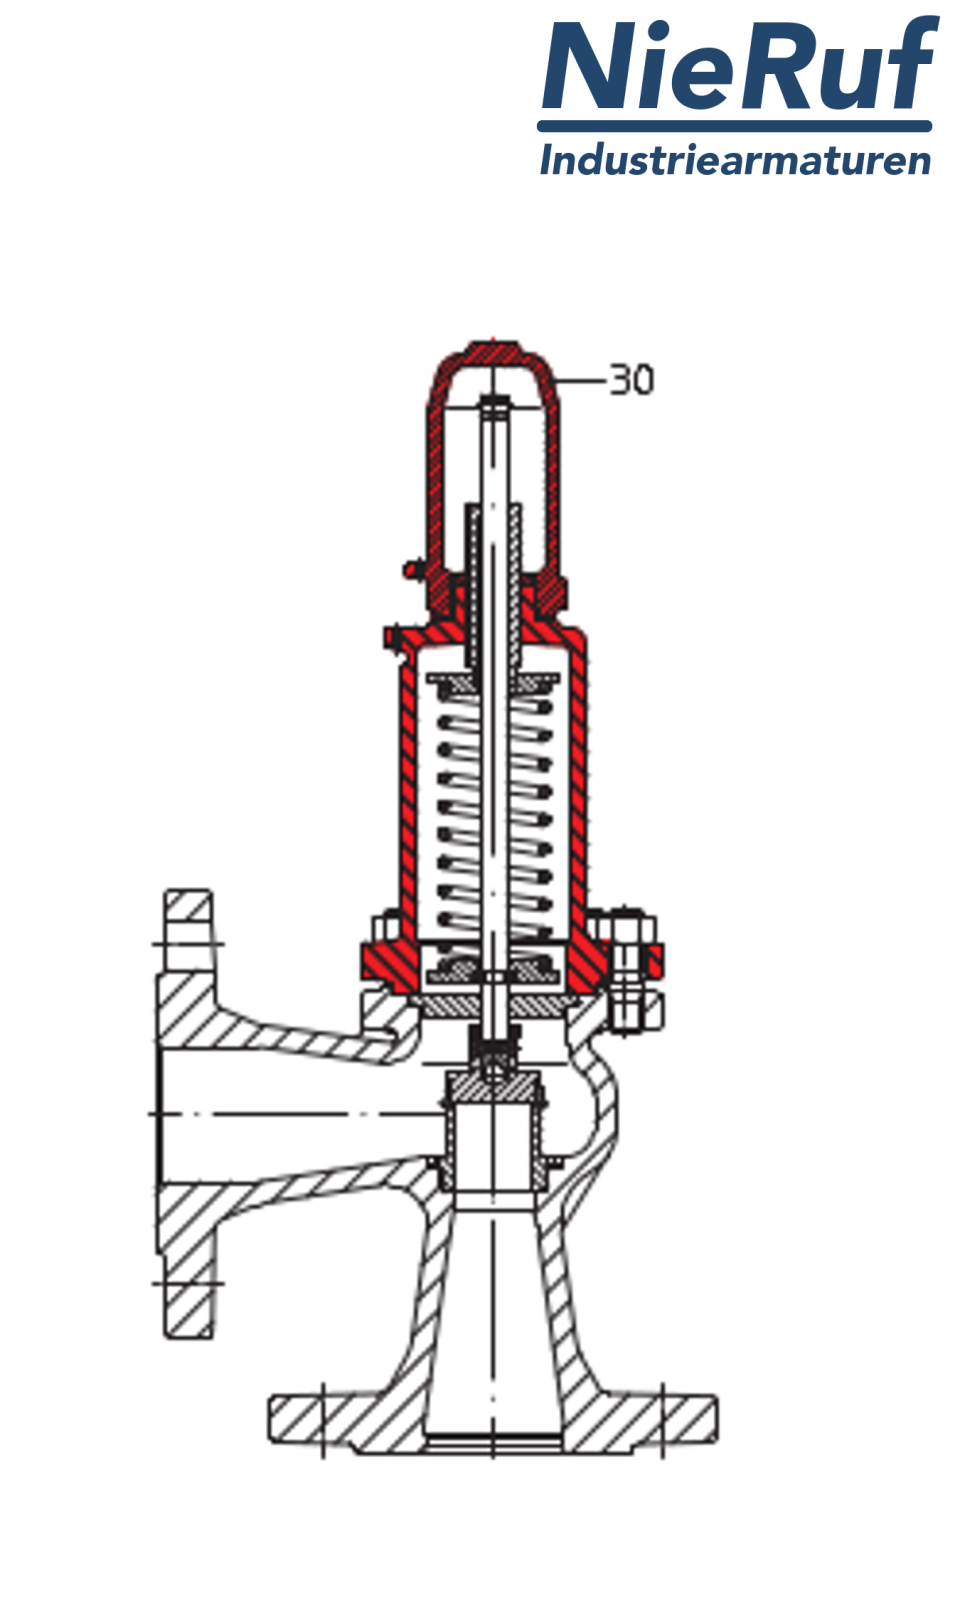 flange-safety valve DN20/DN20 SF0101, cast iron EN-JL1040 metal, without lever